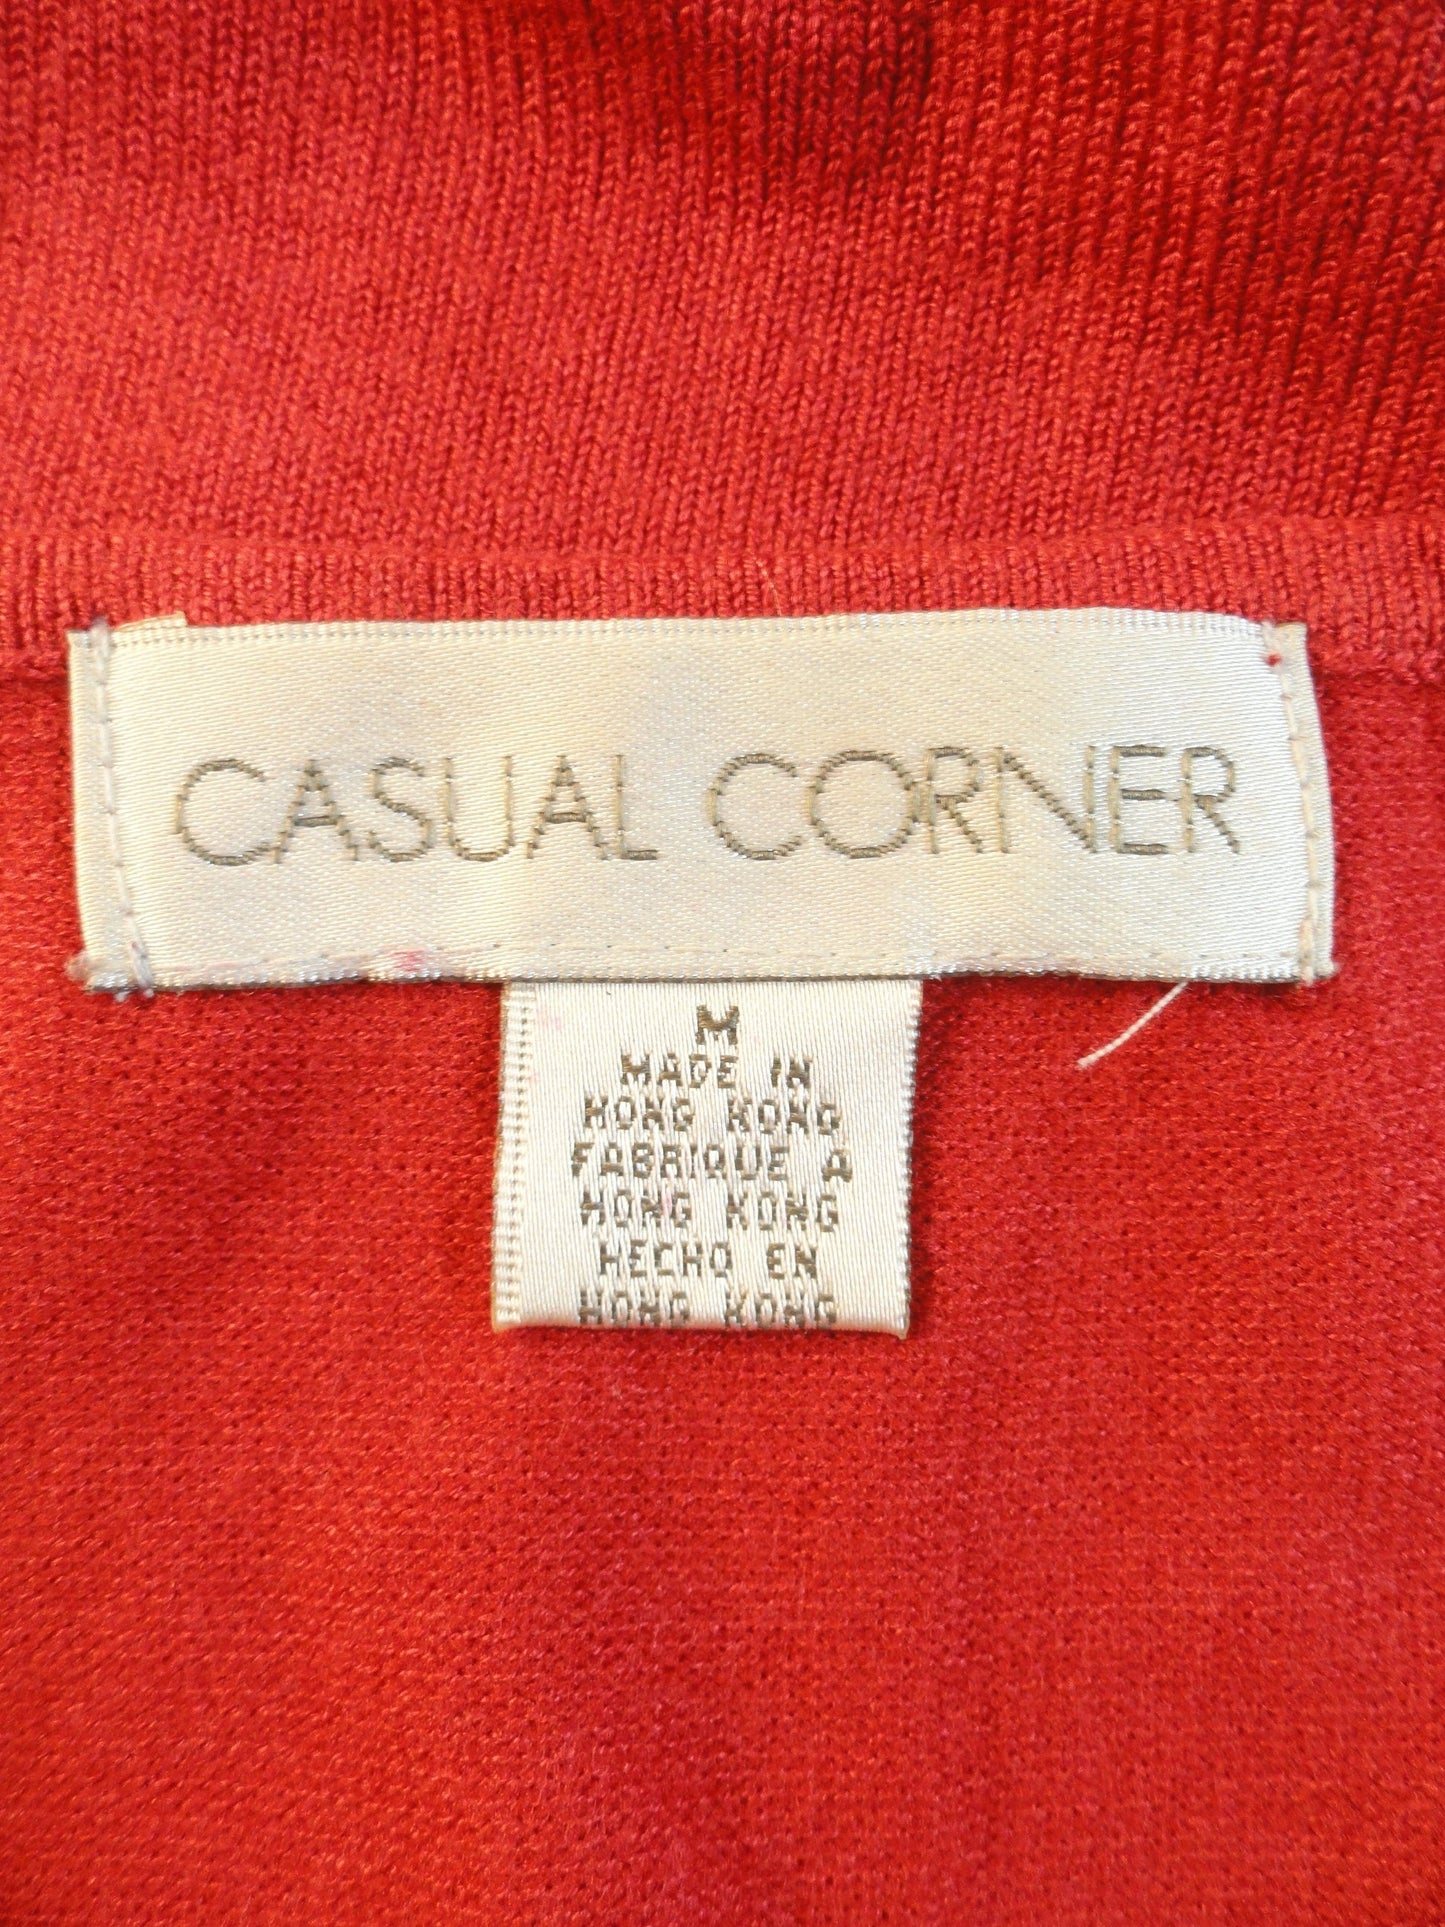 Casual Corner 80's Sequin Top Red Size M SKU 000087